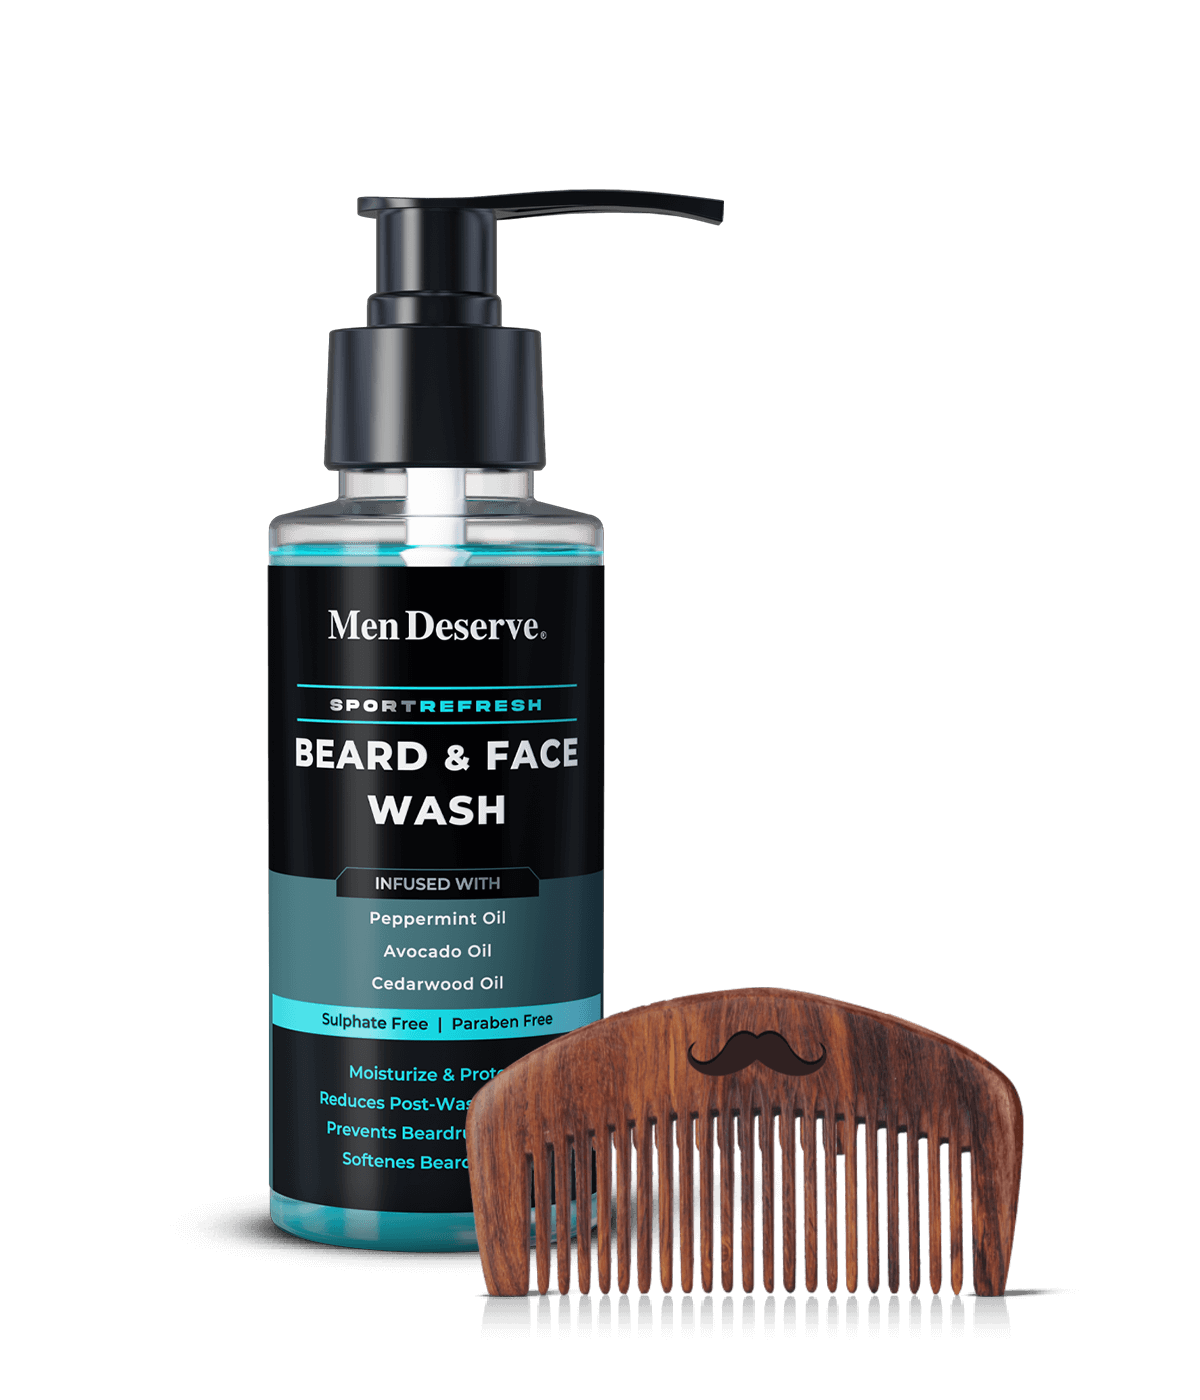 Combo of Beard & Face Wash with Beard Comb